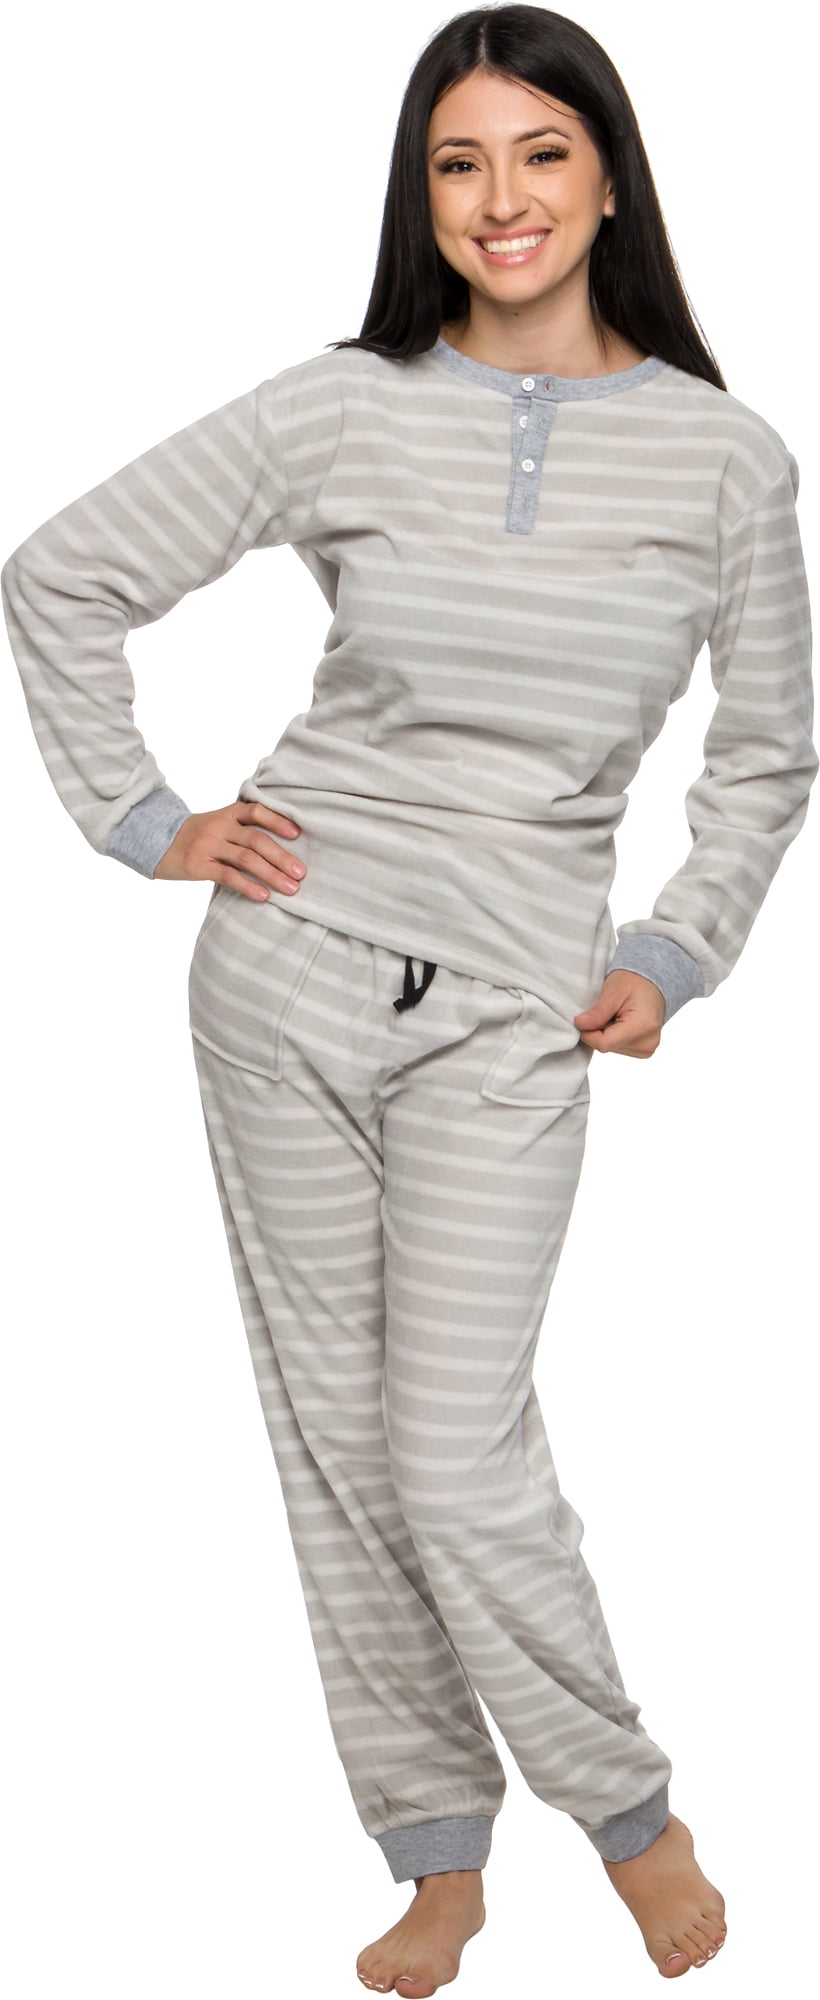 Silver Lilly Womens Pajama 2 Piece Set Soft Fleece Loungewear Striped Pjs Pink X Small Walmart Com Walmart Com